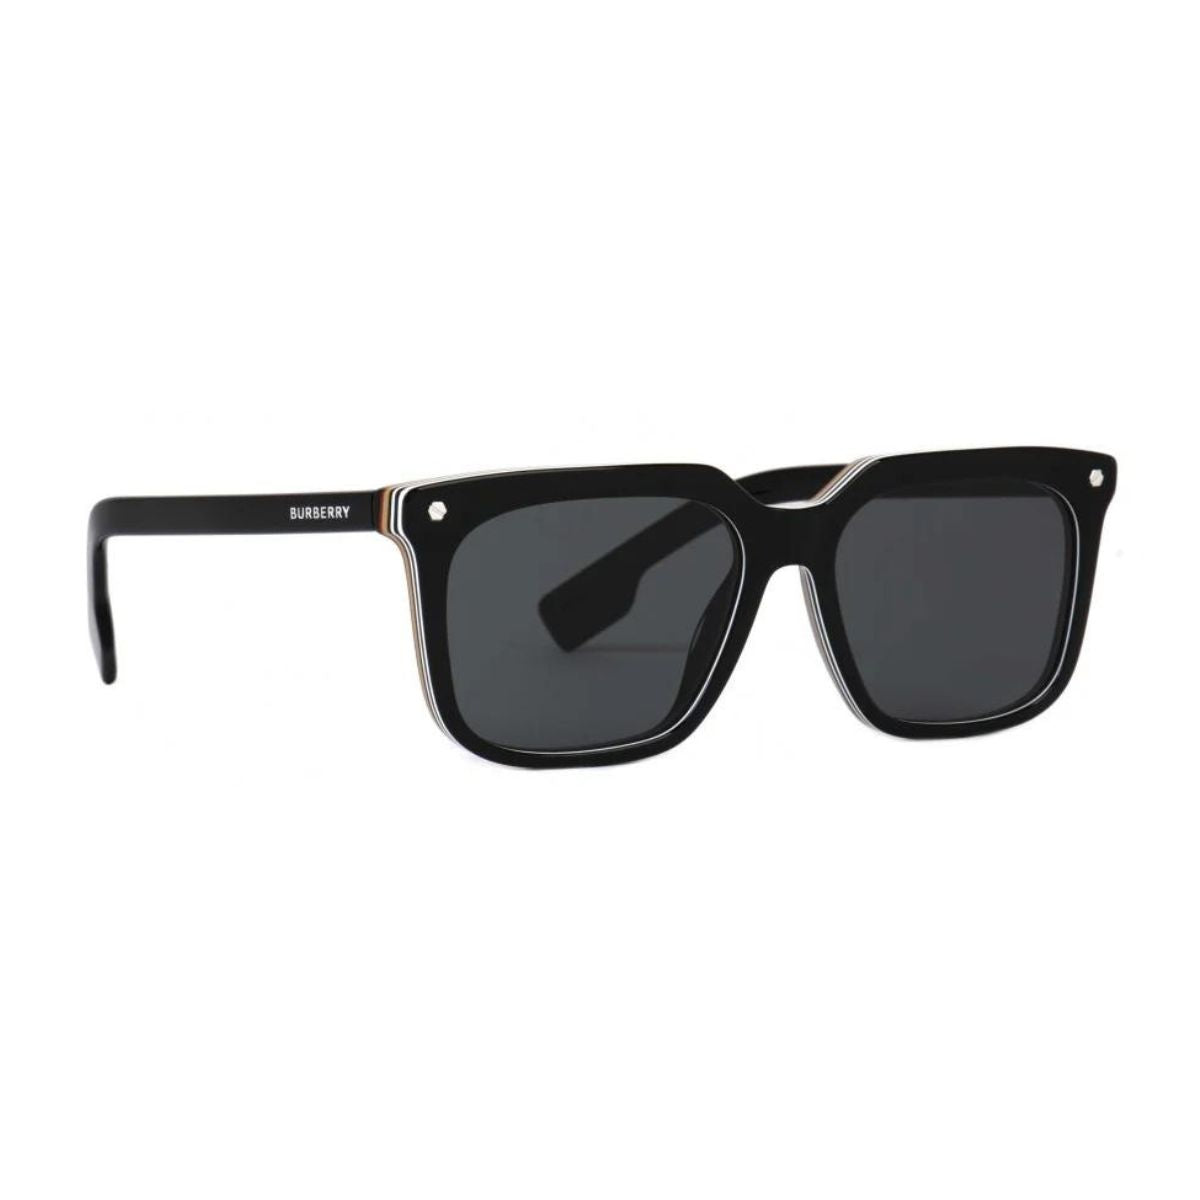 "Stylish Burberry 4337 3798/87 Eyewear sunglasses for UV Protection Online At Optorium"